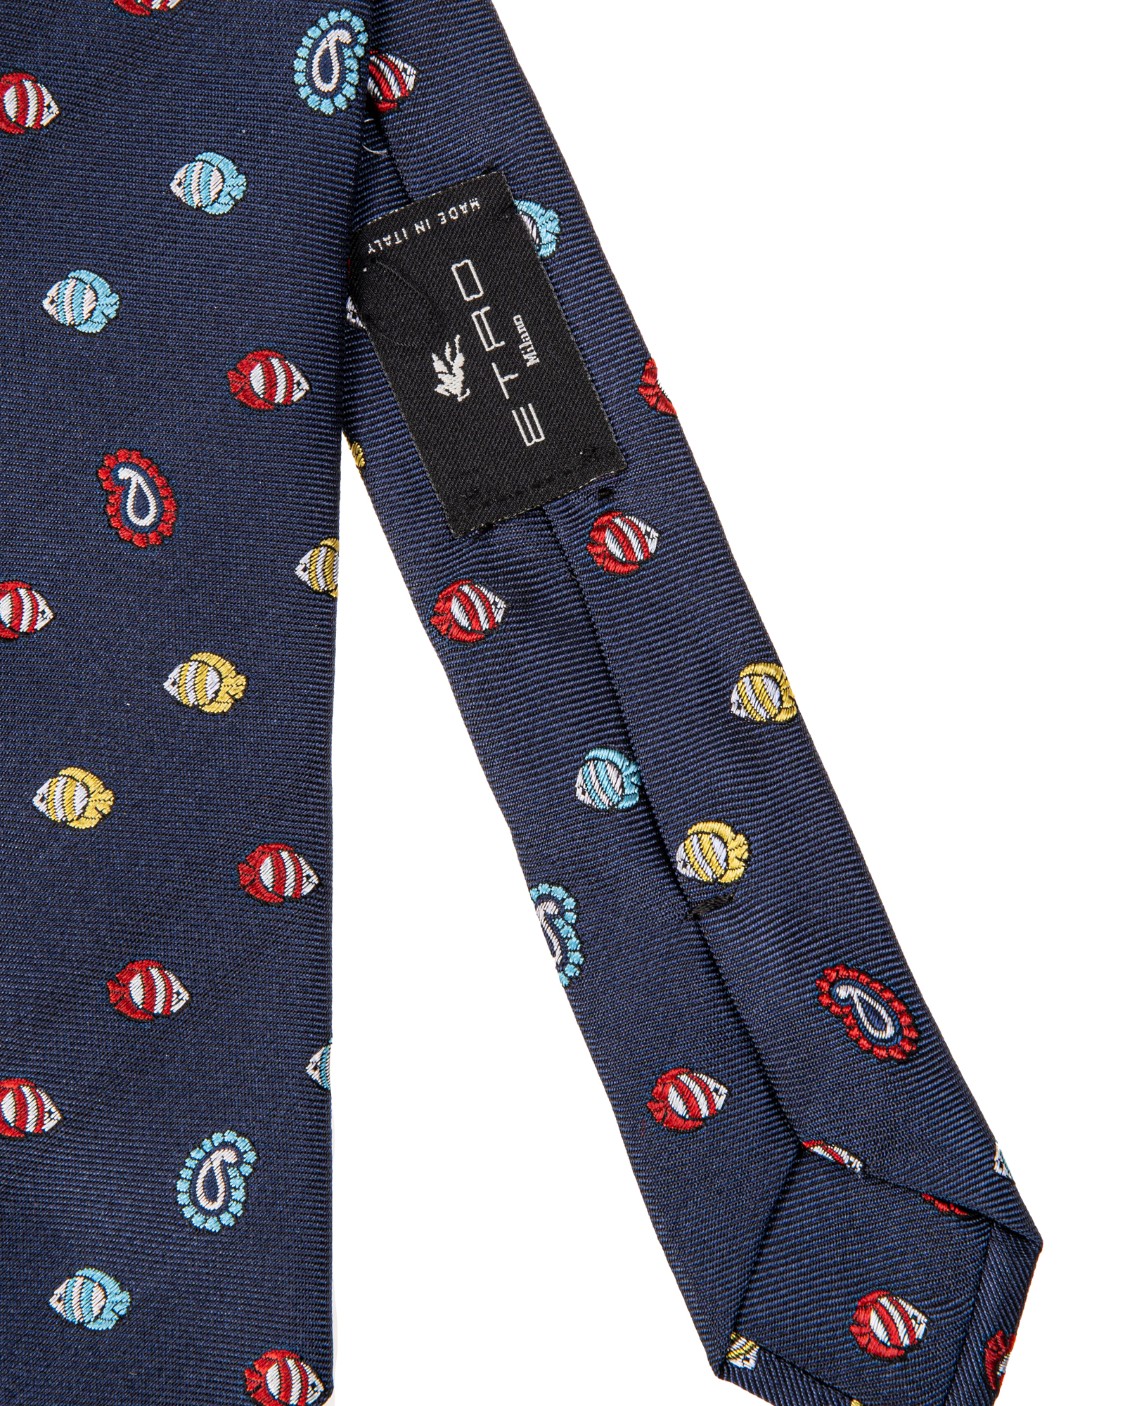 shop ETRO  Cravatta: Etro cravatta in seta jacquard con motivi Paisley.
Larghezza 8cm.
Made in Italy.
Composizione: 100% seta.. 12026 3035-0200 number 6119732